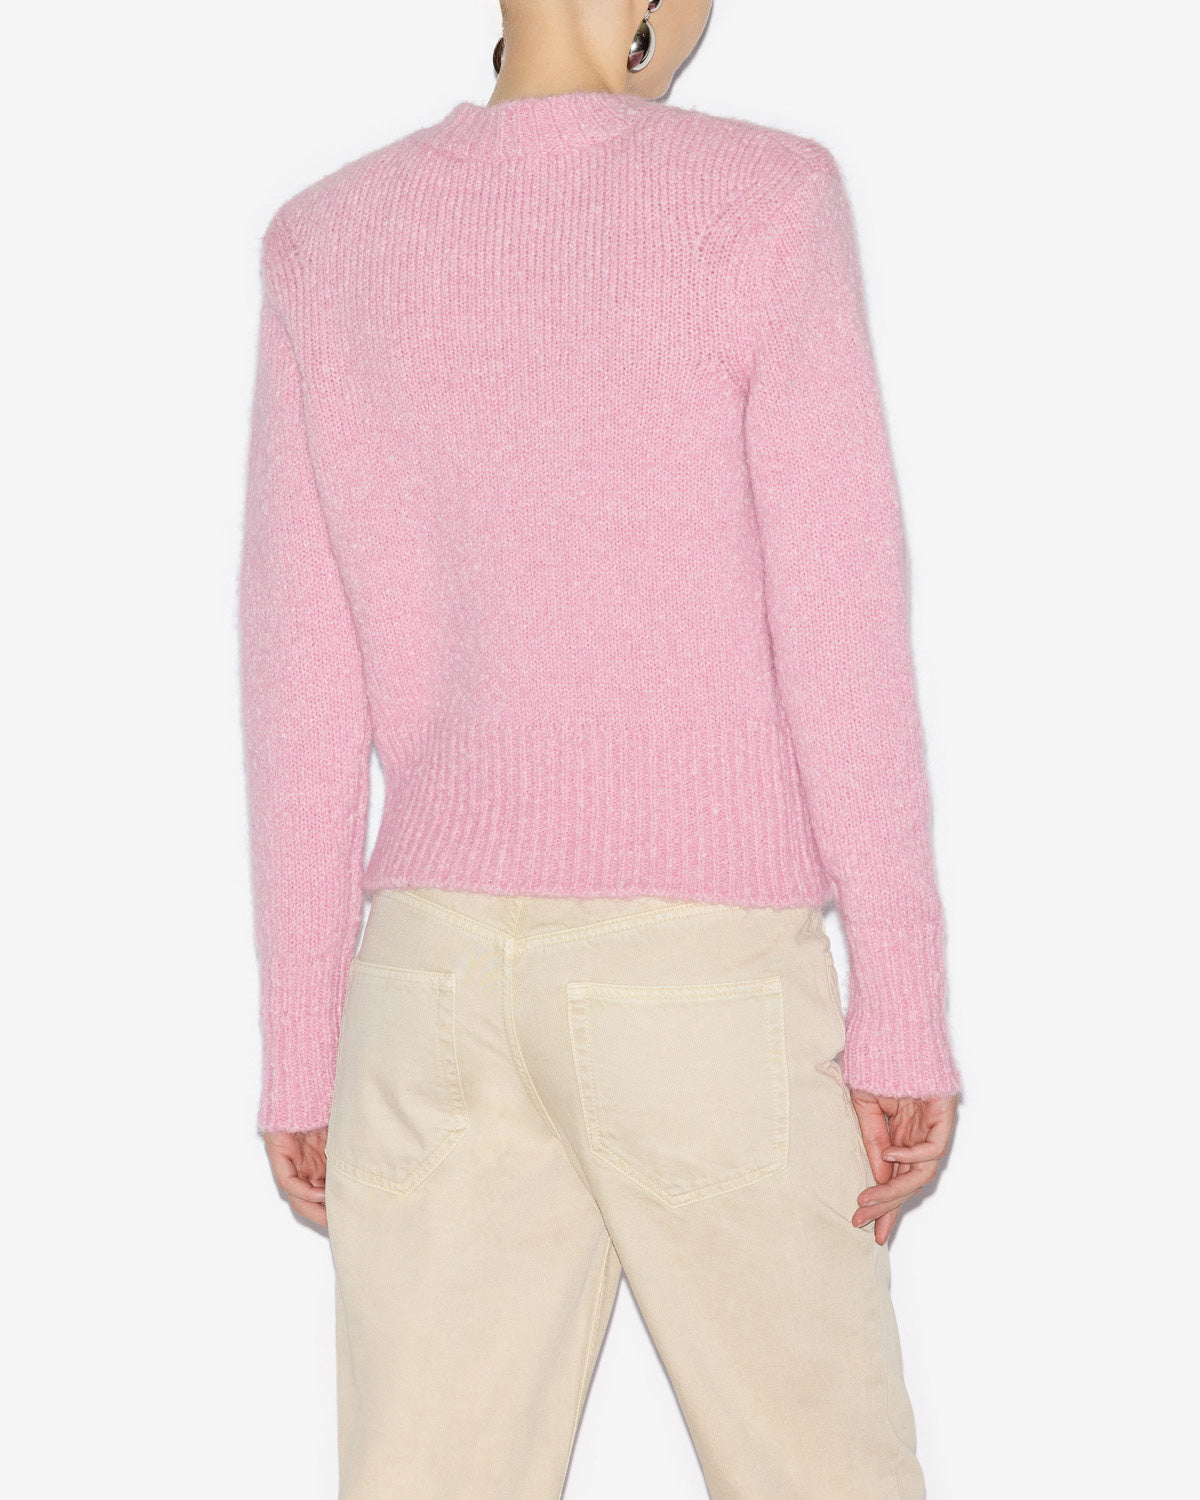 Kalo セーター Woman Light pink 3